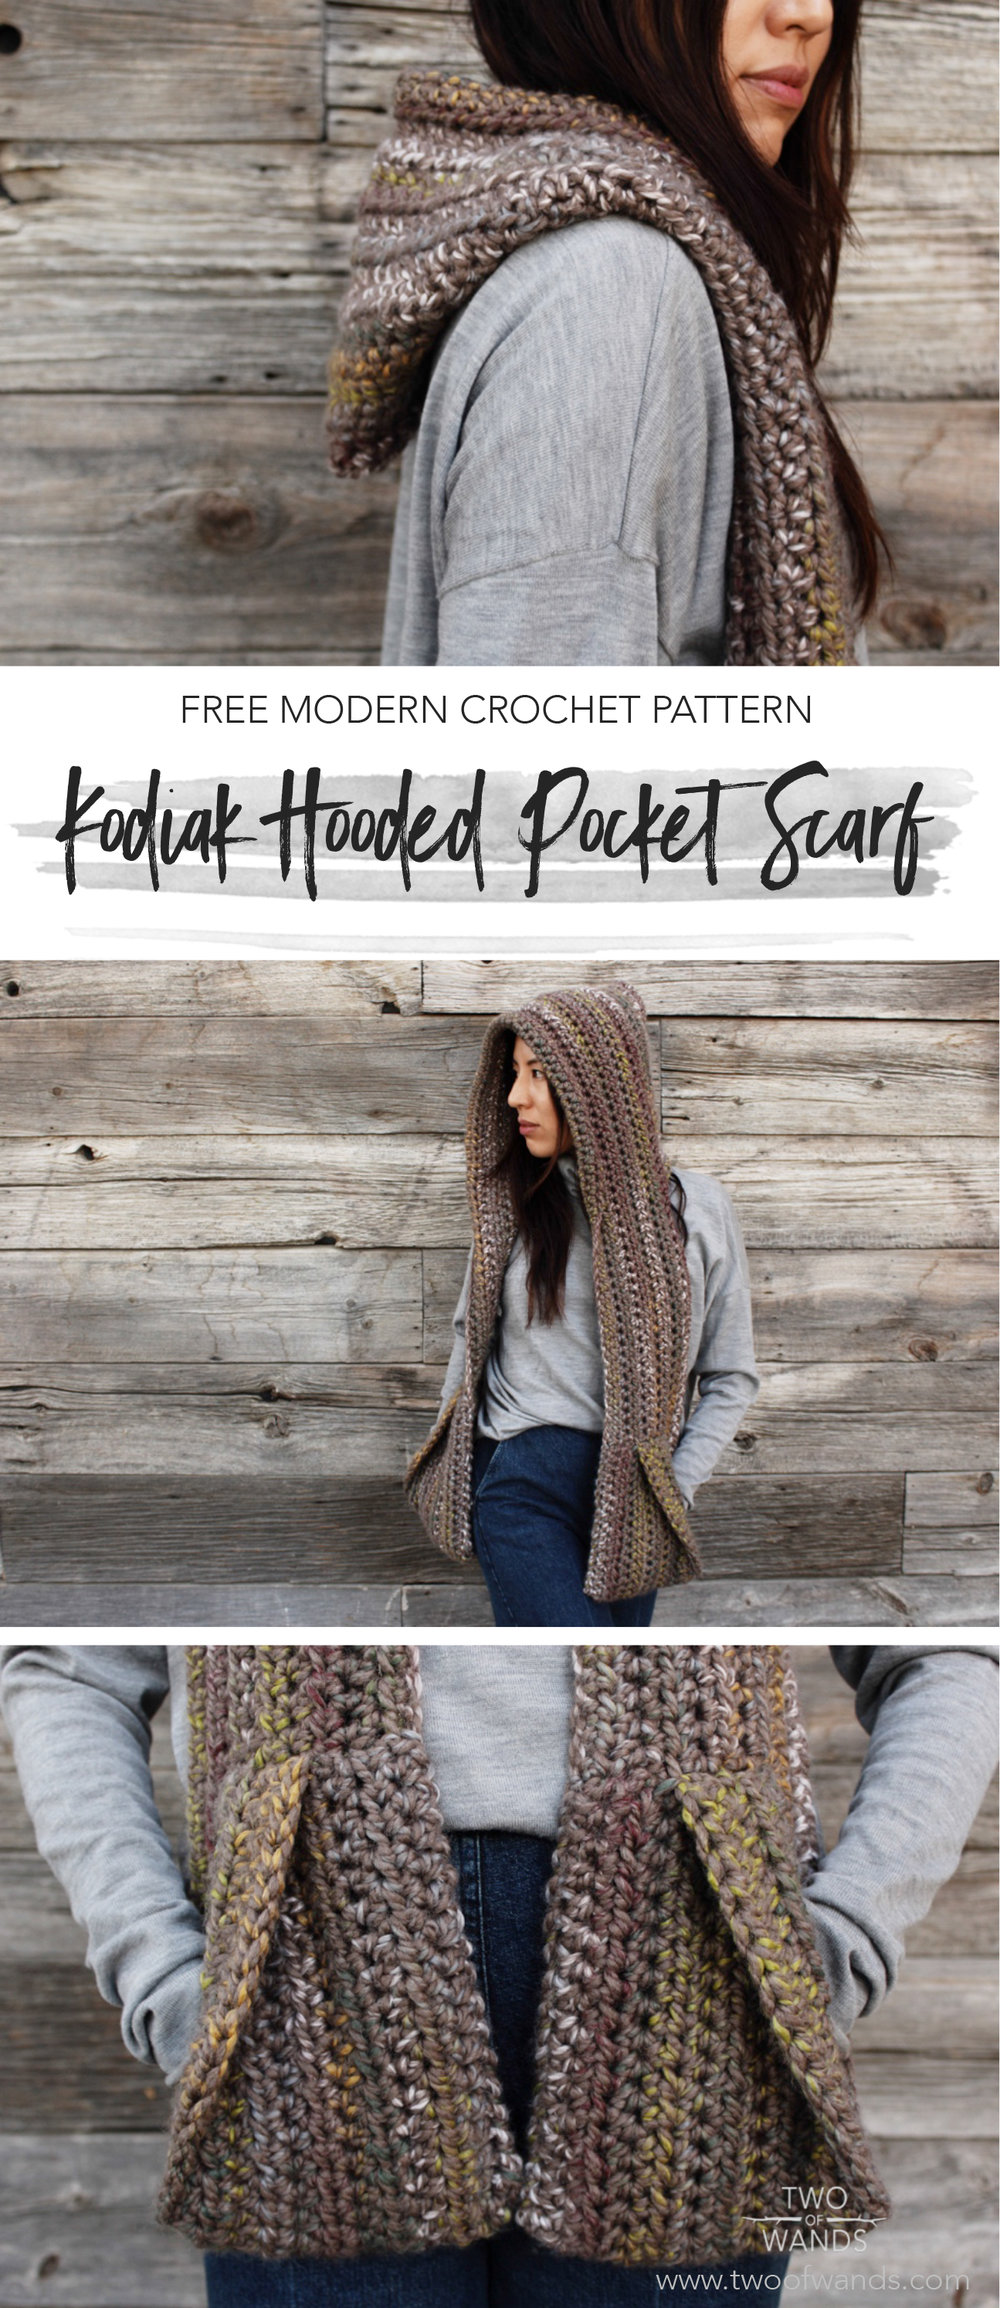 Kodiak Hooded Pocket Scarf pattern by Two of Wands